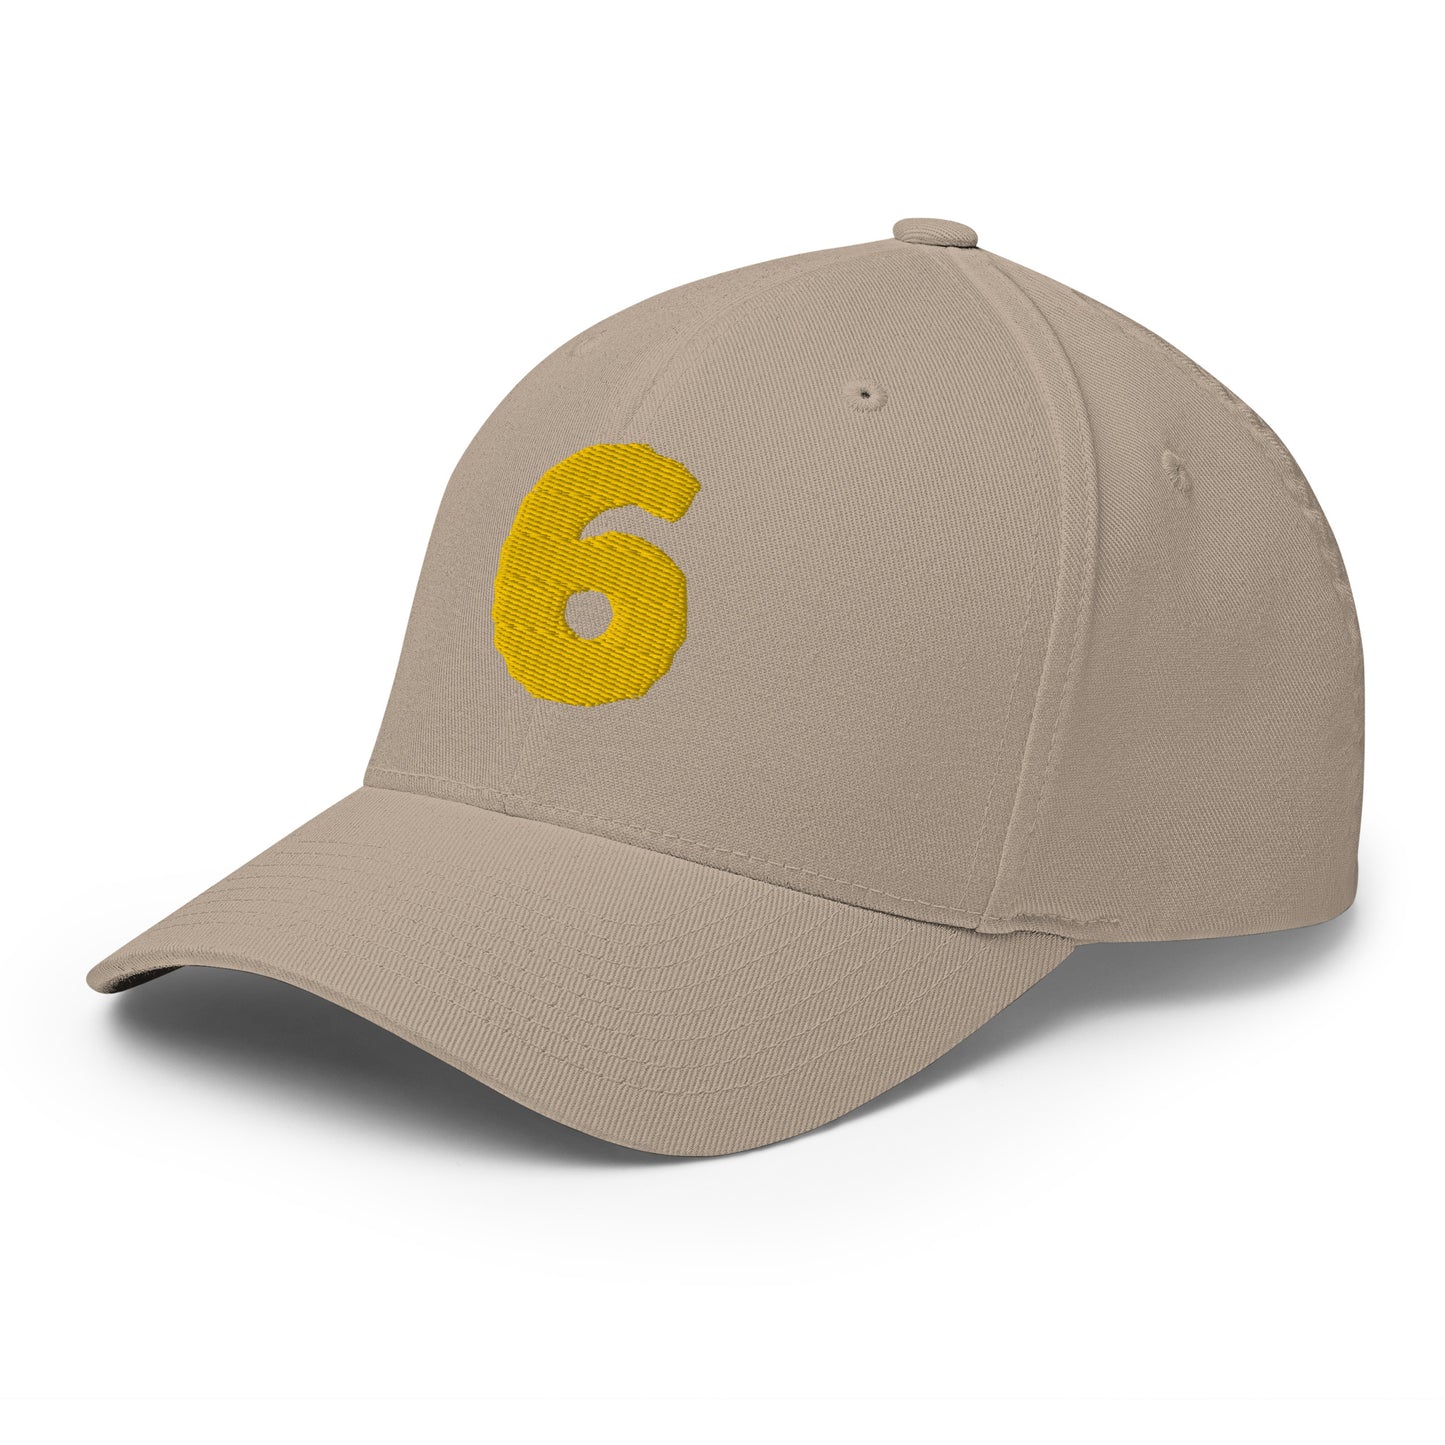 Baseball Cap with Number 6 Six Symbol